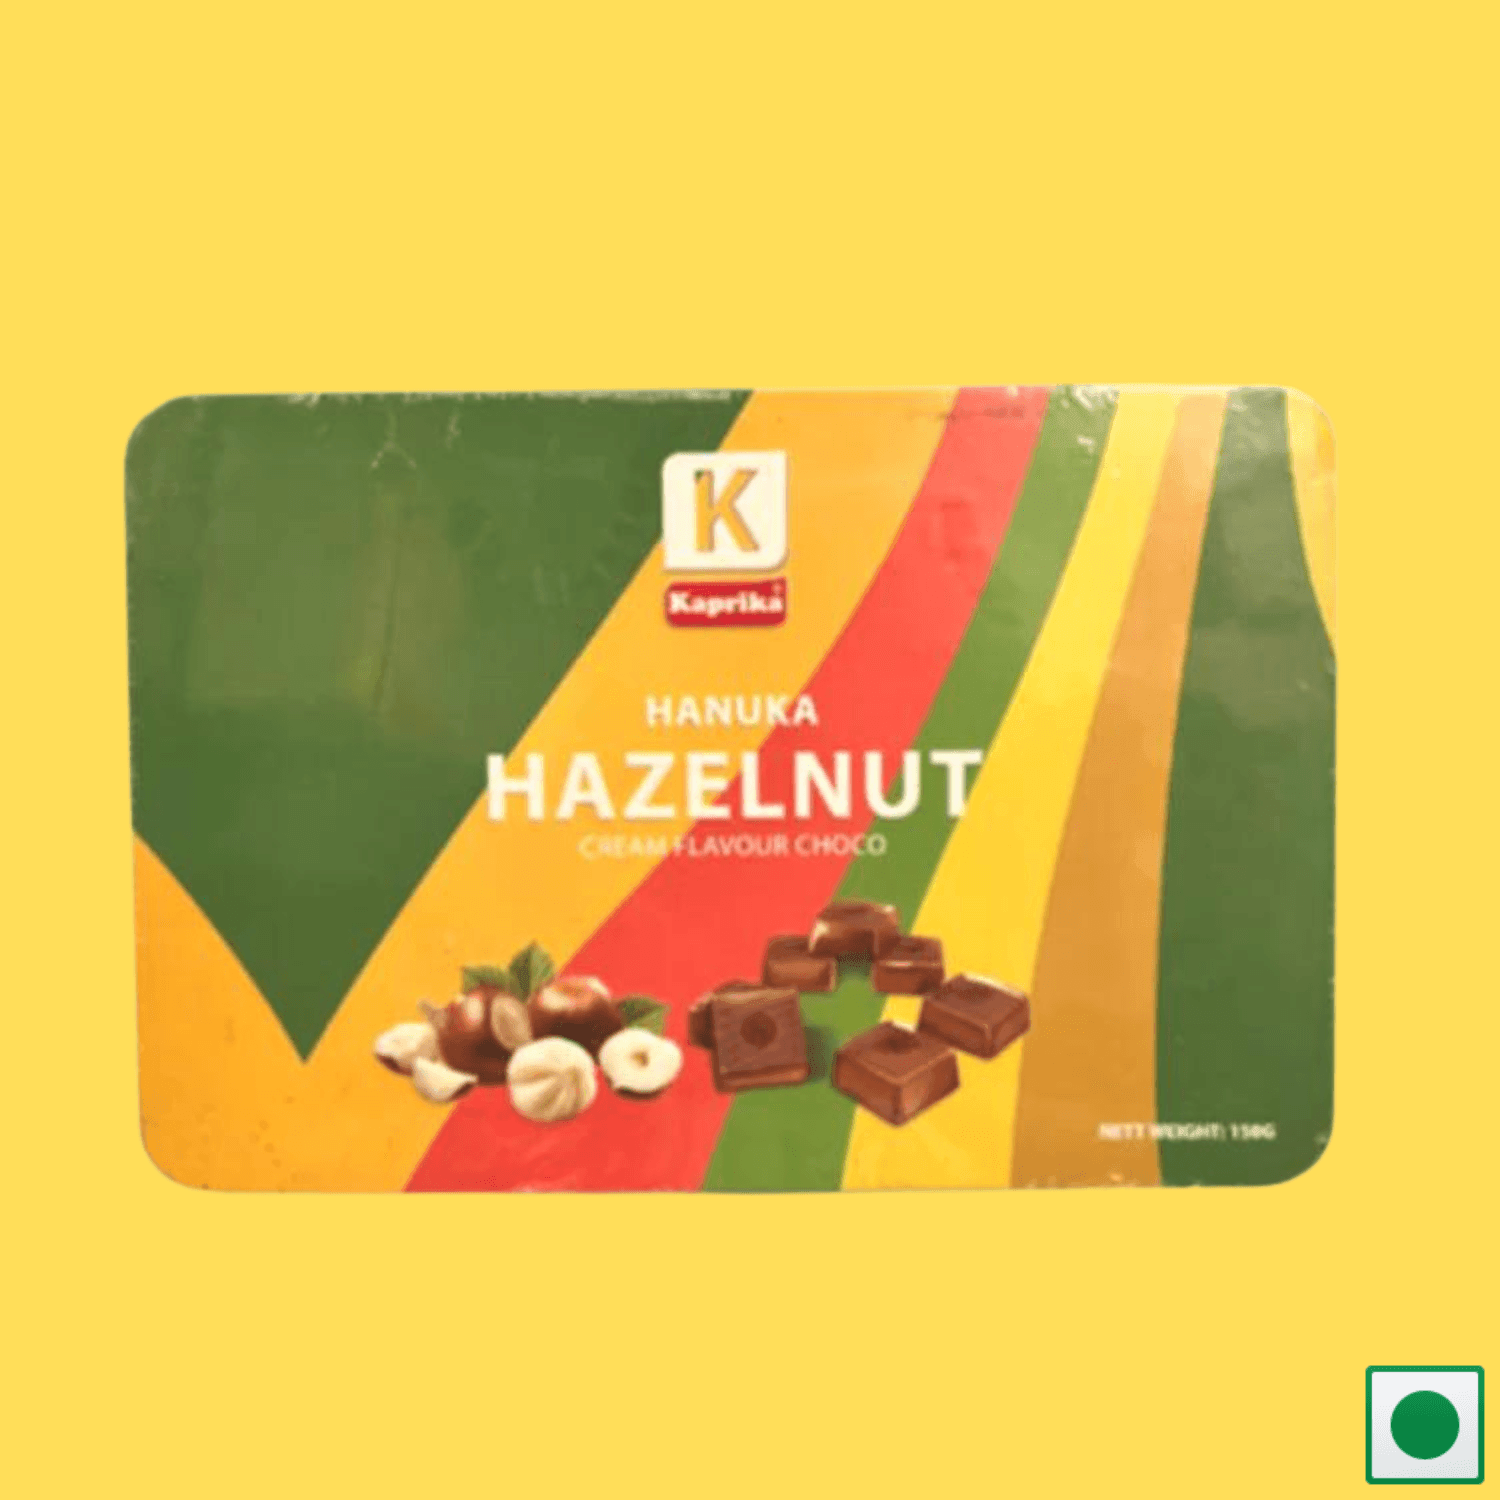 Kaprika Hanuka Exclusive Hazelnut Nuts Gift Pack, 150g - Super 7 Mart